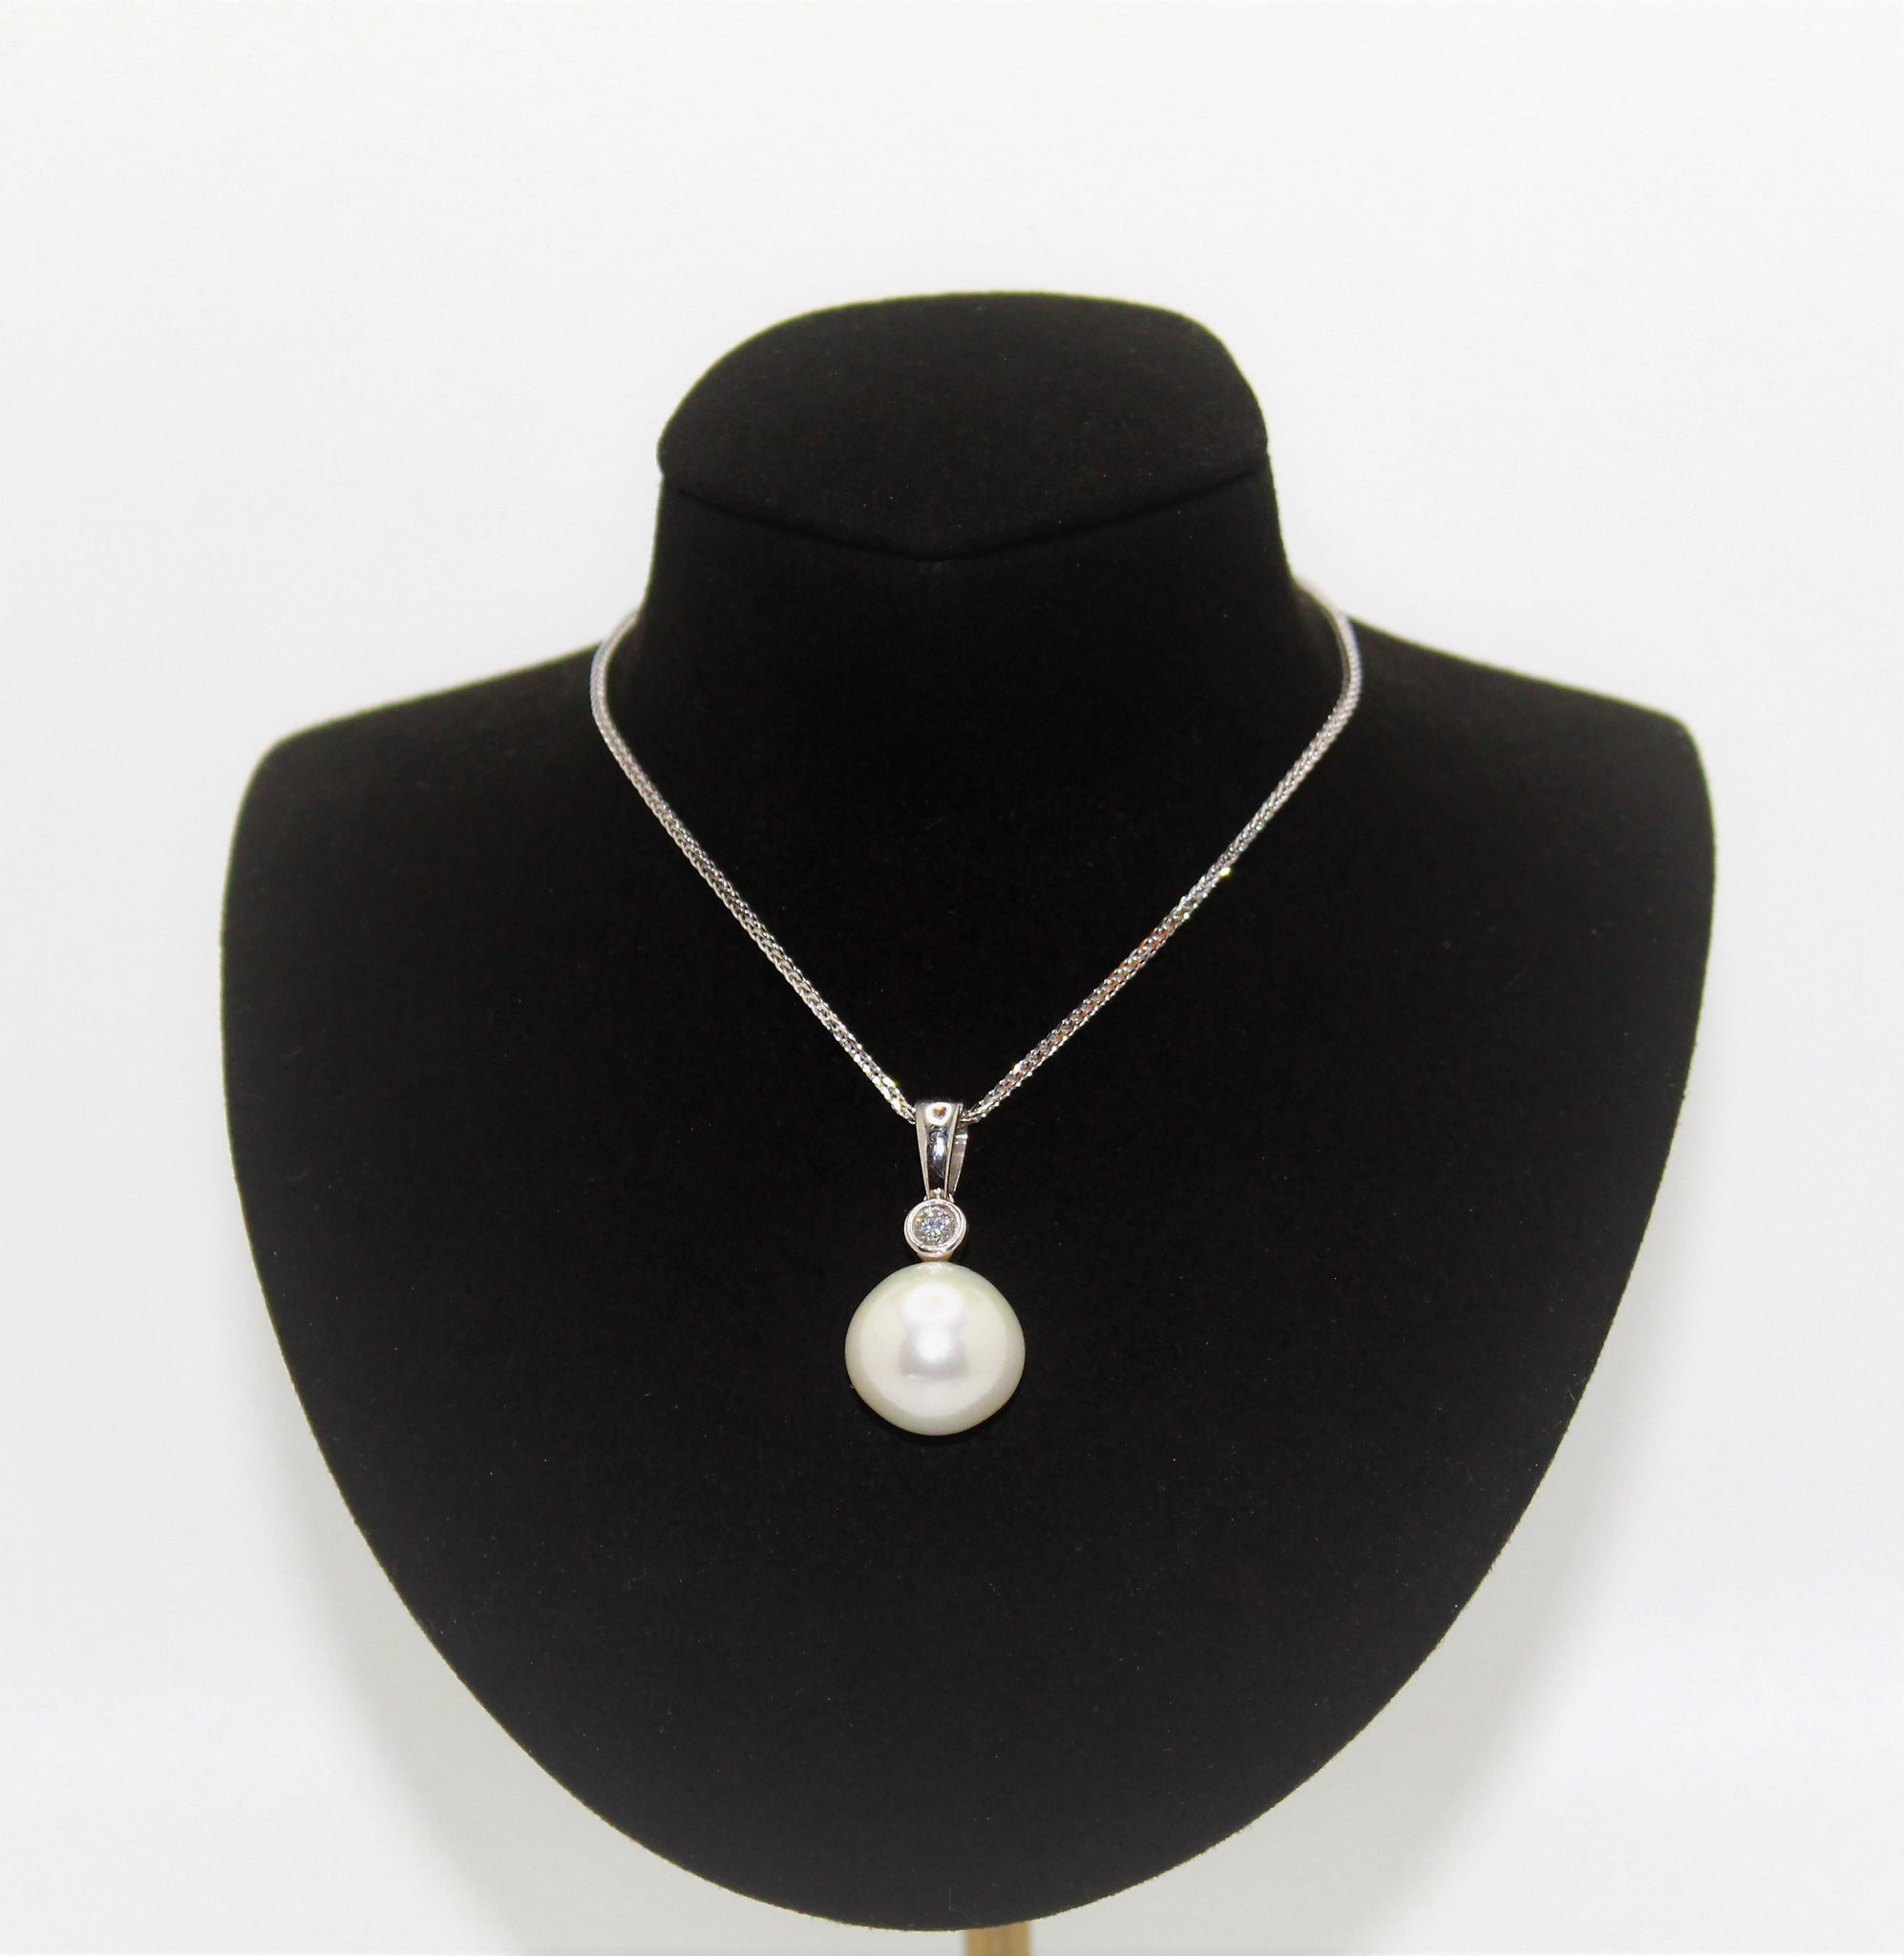 Australian Pearl pendant